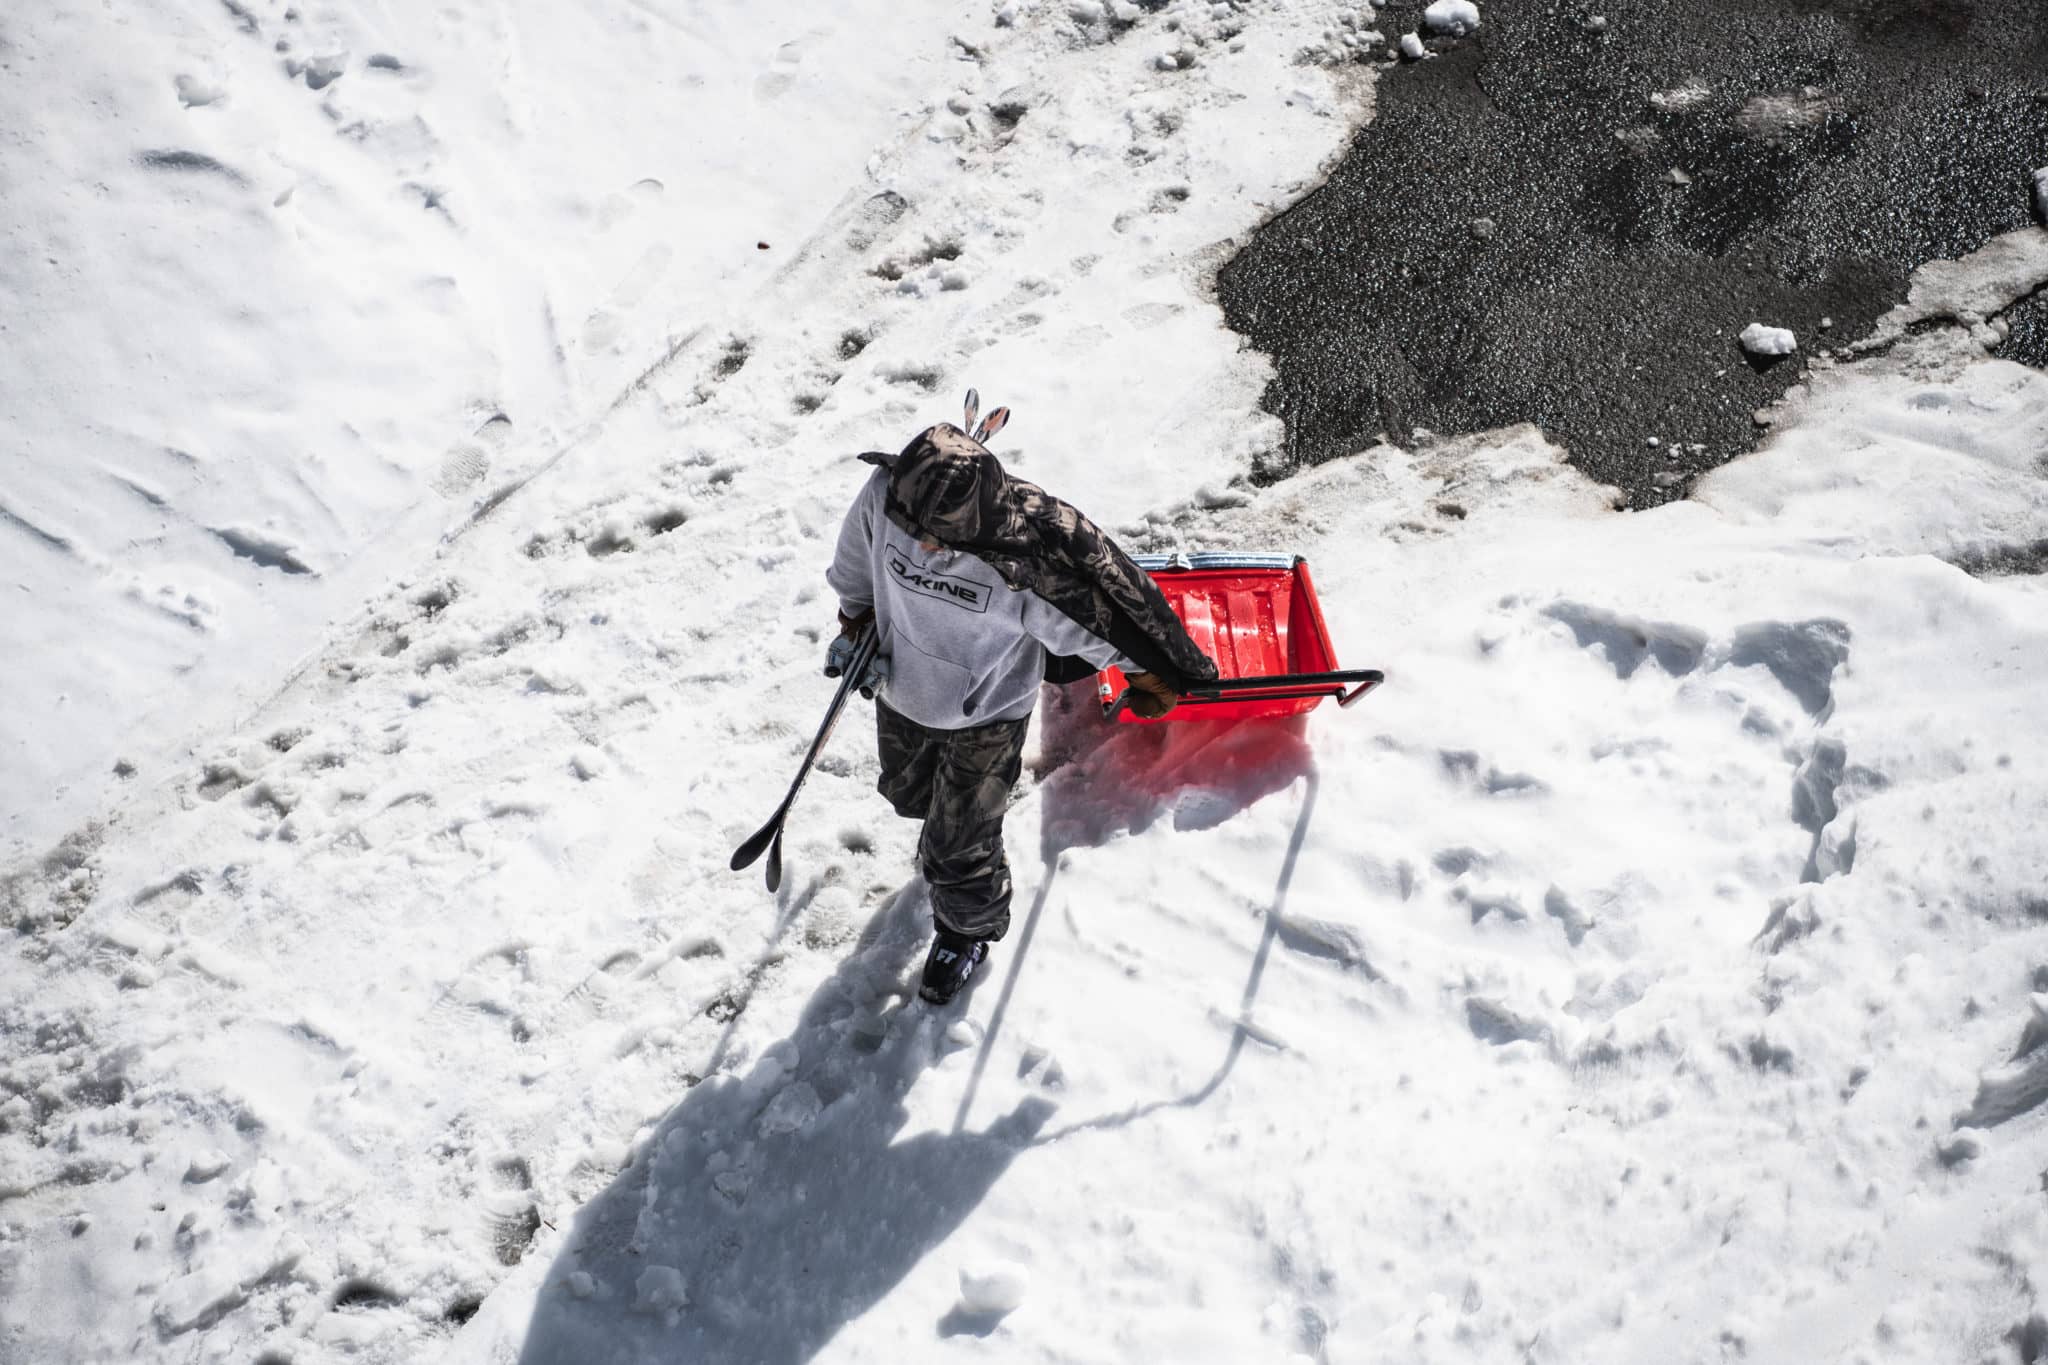 Photo taken by Laura Obermeyer of skier shoveling during Jyosei